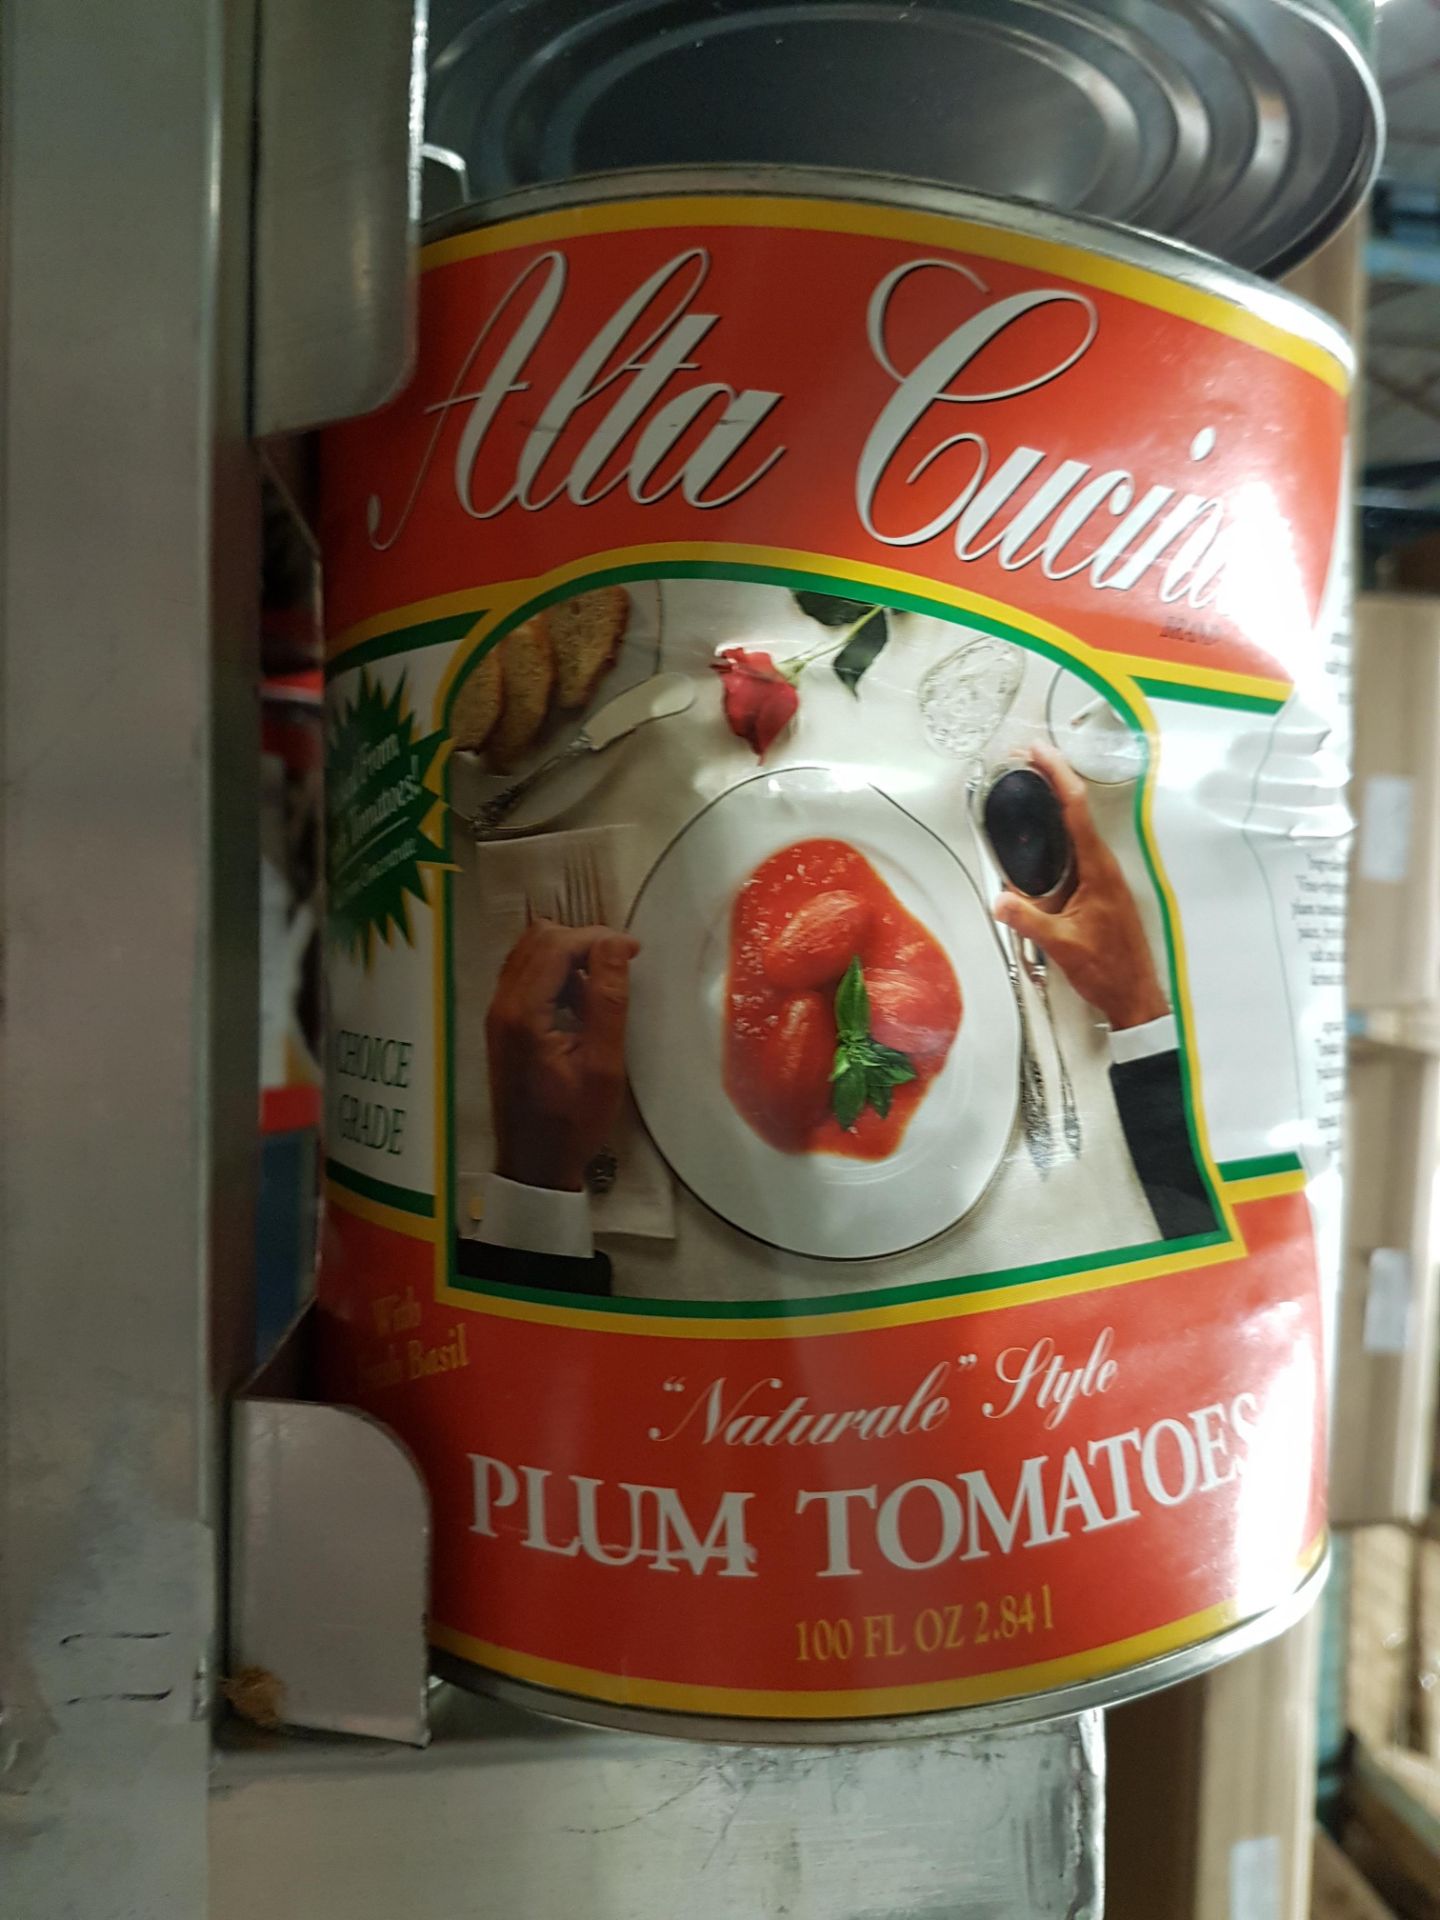 La Cucina Plum Tomatoes - 5 x 2.84LT Cans - Dented